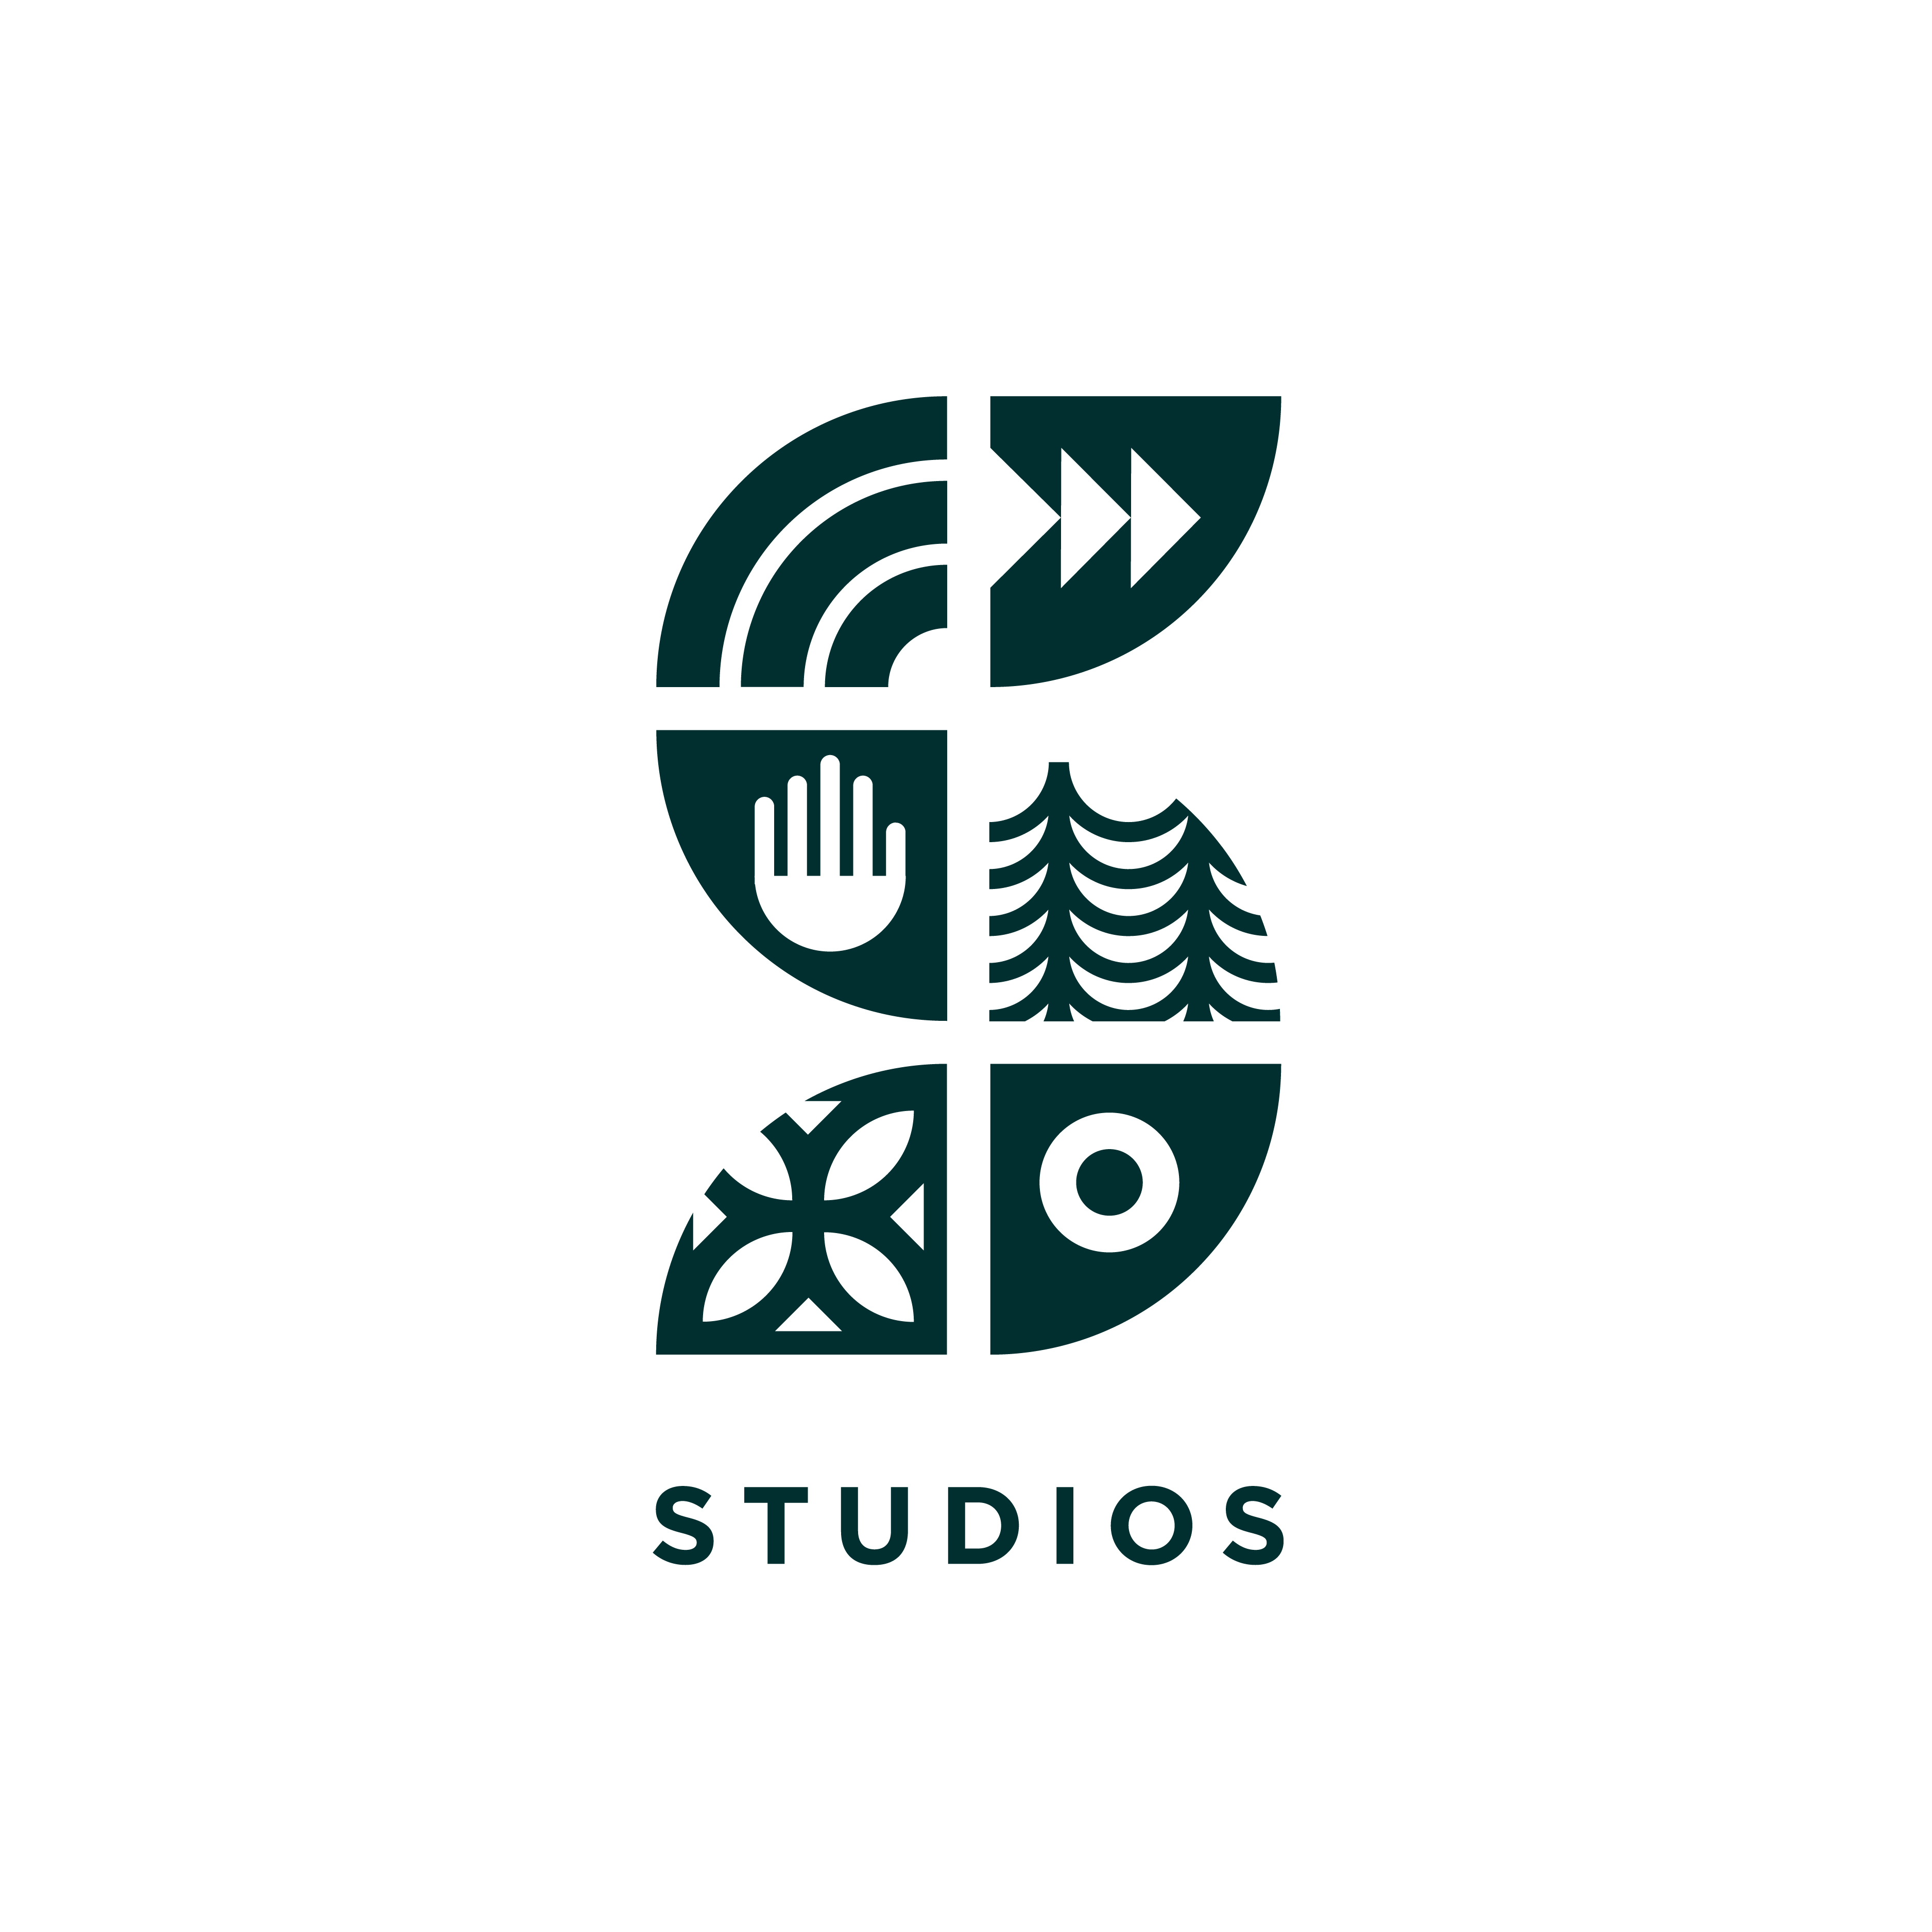 Splitrock Studio logo design by logo designer Favor the Brave for your inspiration and for the worlds largest logo competition